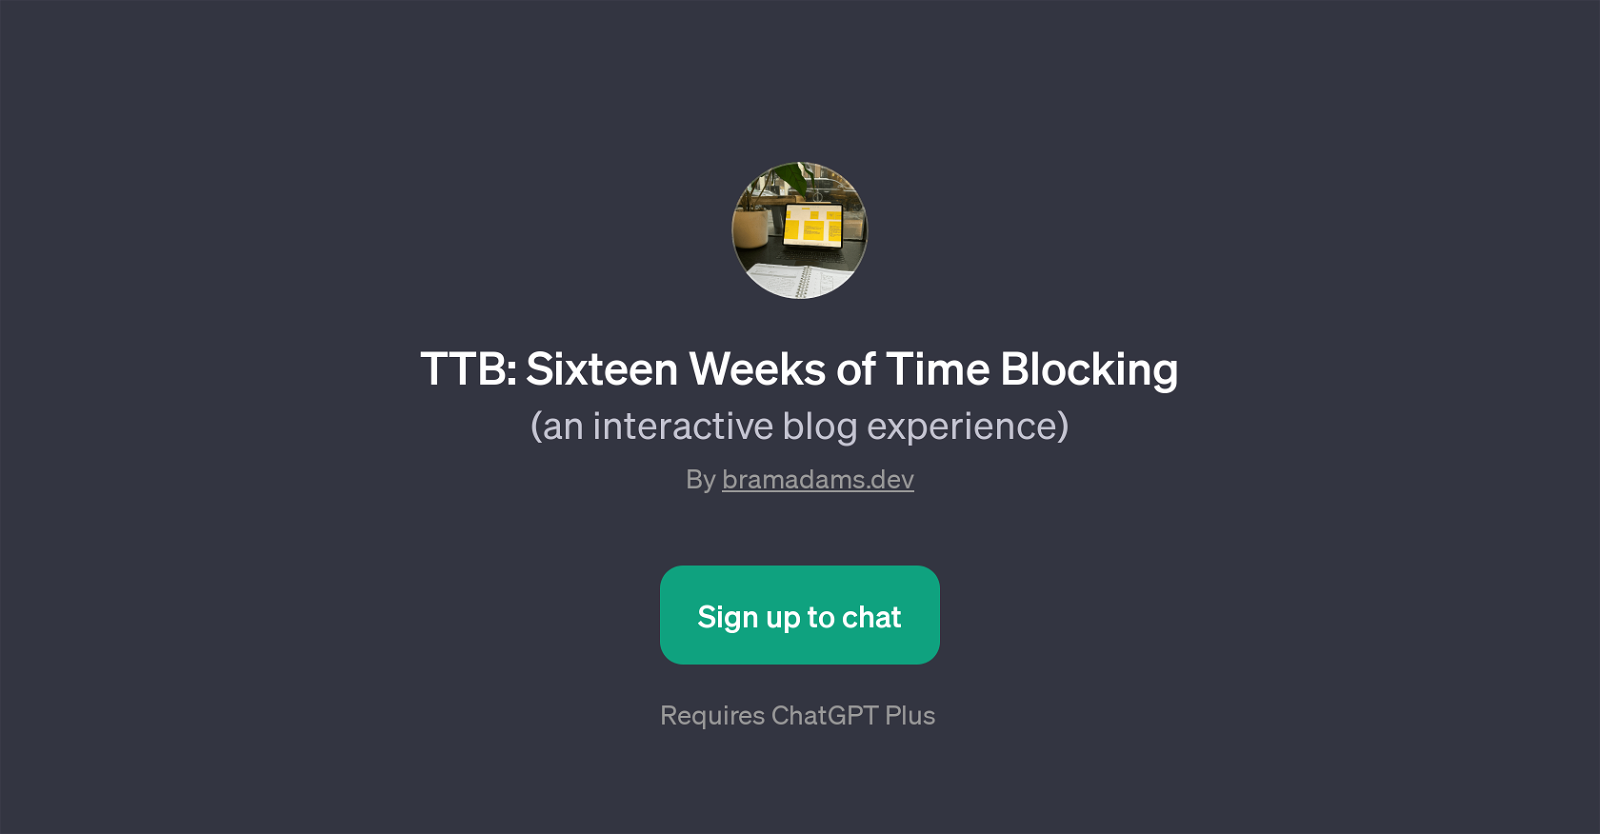 TTB: Sixteen Weeks of Time Blocking website